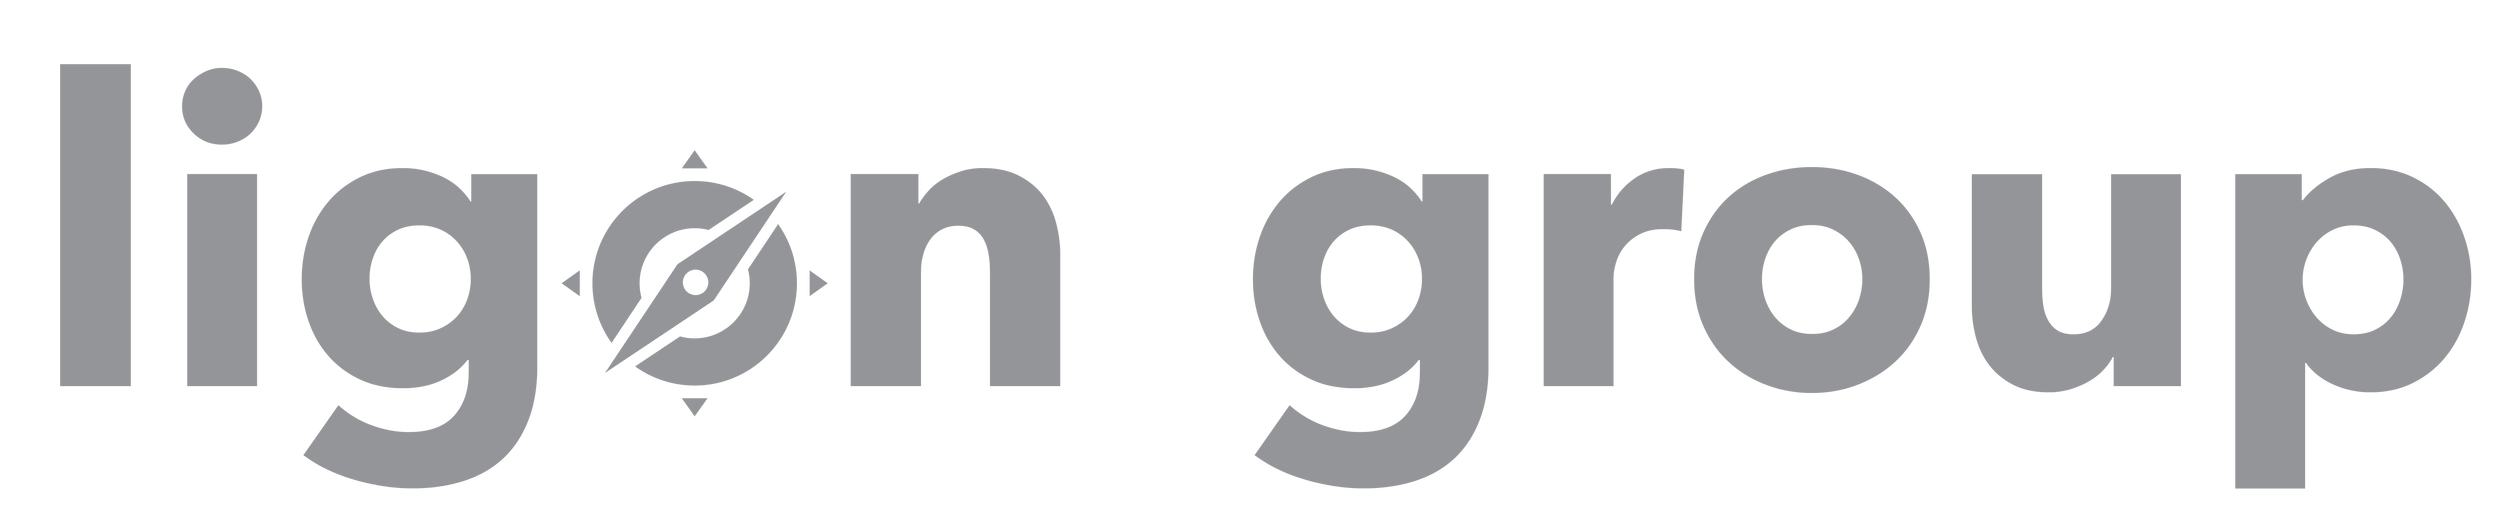 Ligon Group Logo Primary-01 copy.png